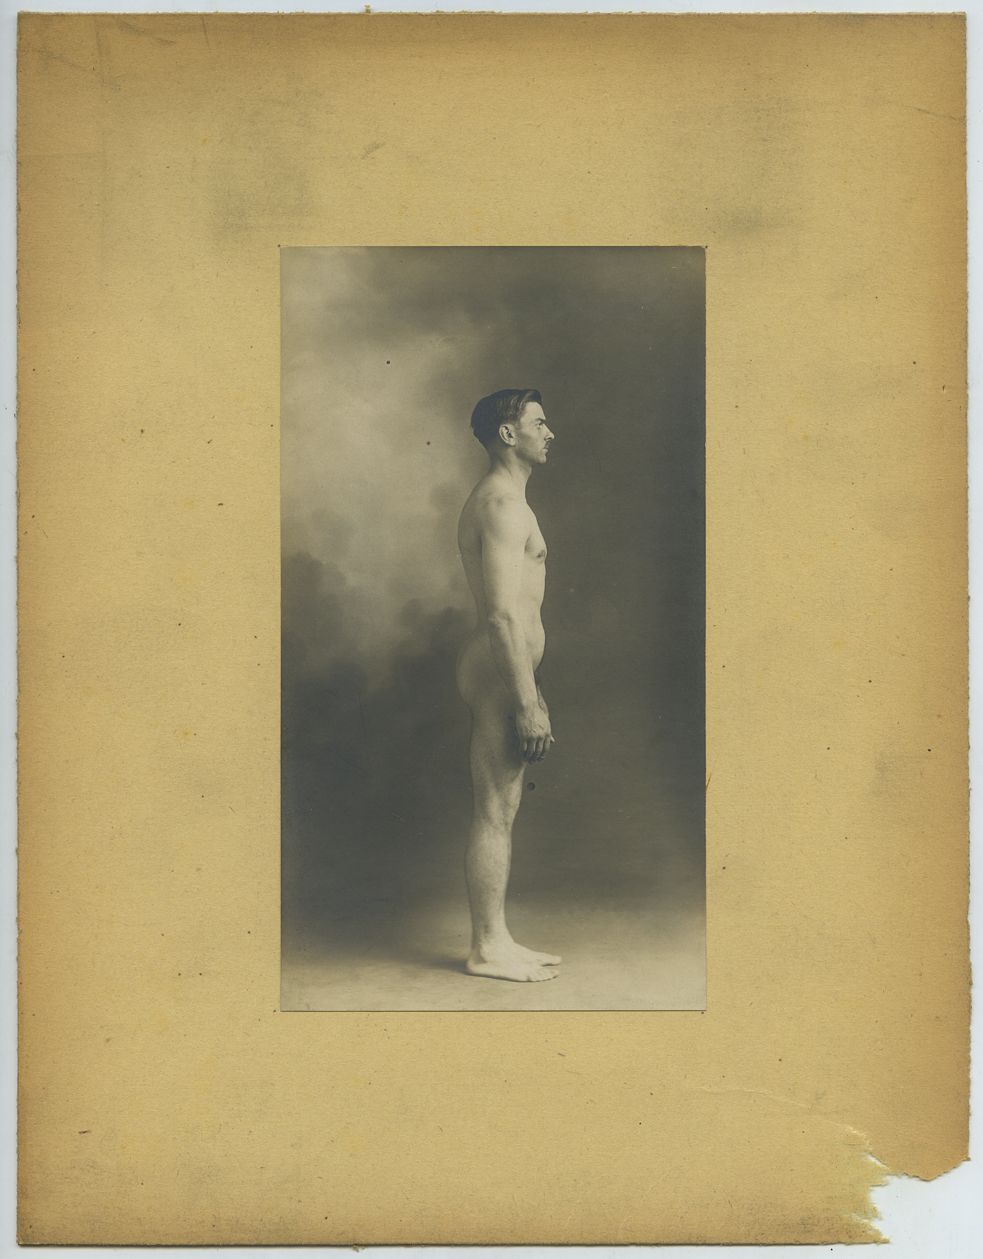 Null 男：DESBONNET 教授和其他人。男性裸体侧面研究，约 1910 年。复古银版画，16.3 x 9 厘米，裱在卡片上。